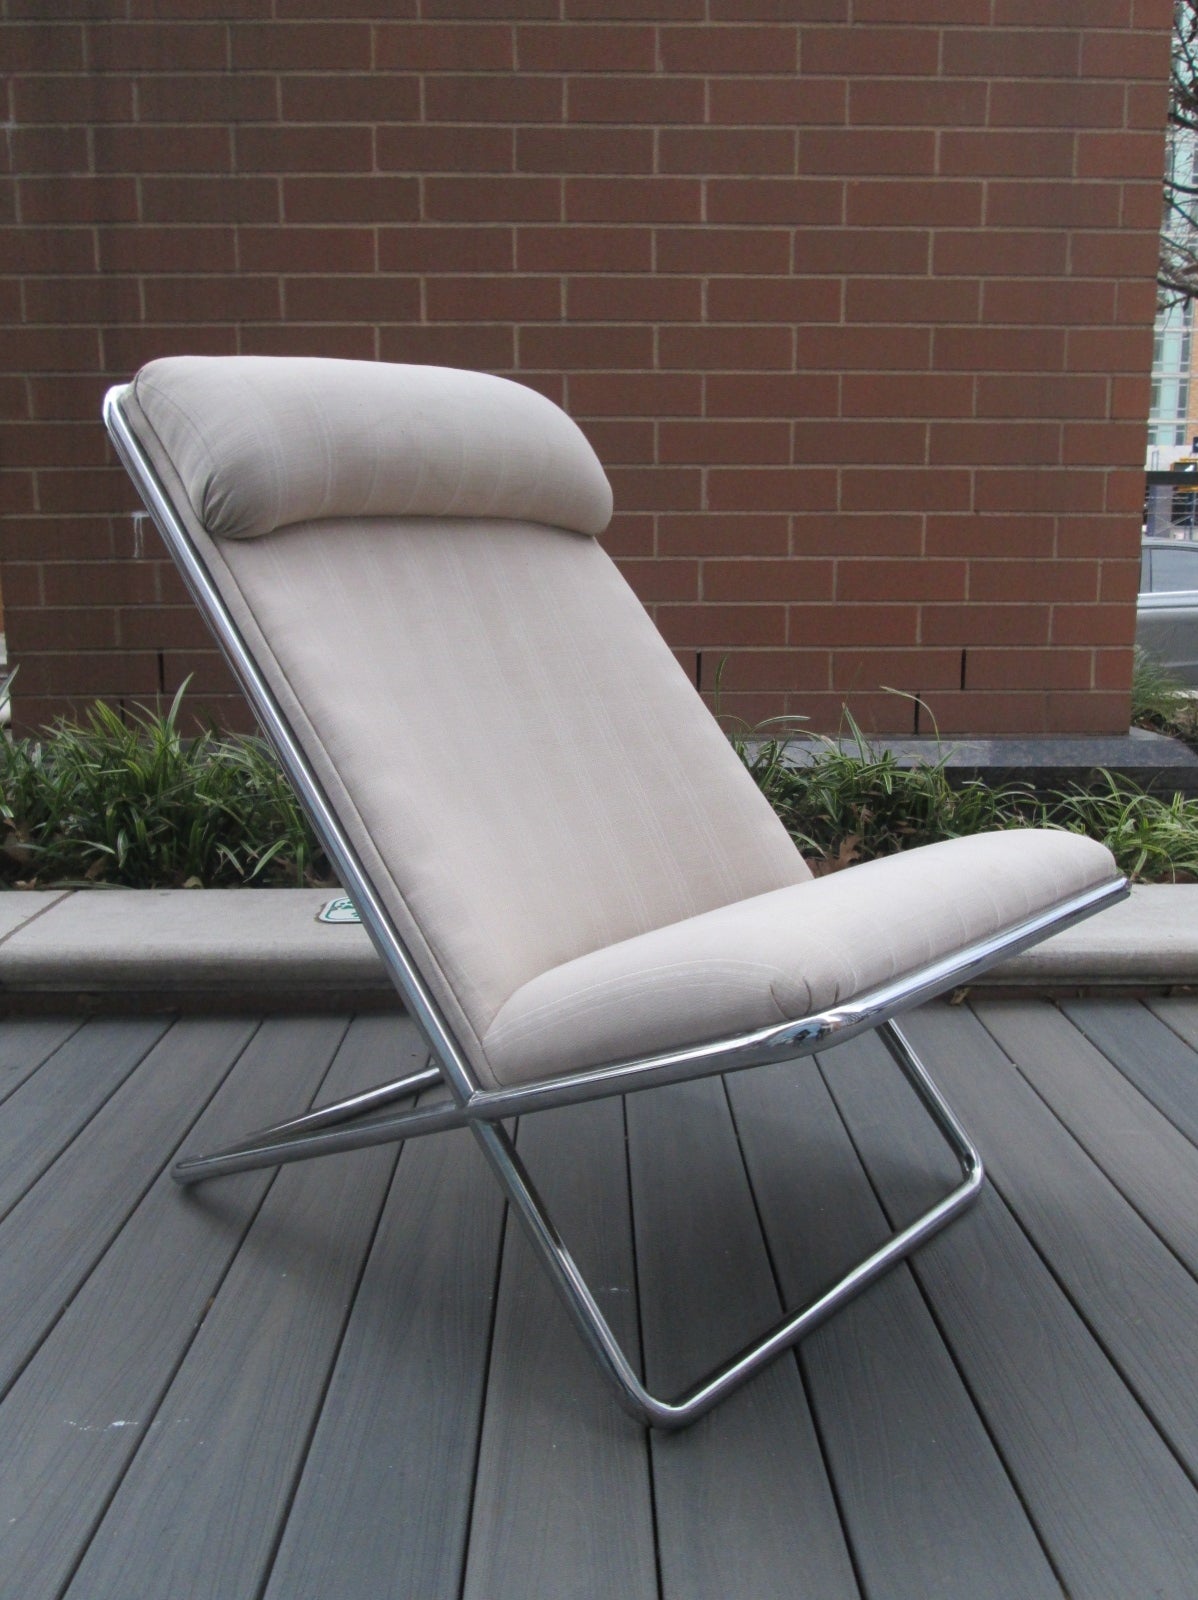 Ward Bennett Scissor Chair for Geiger.  Has a tubular polished steel frame.